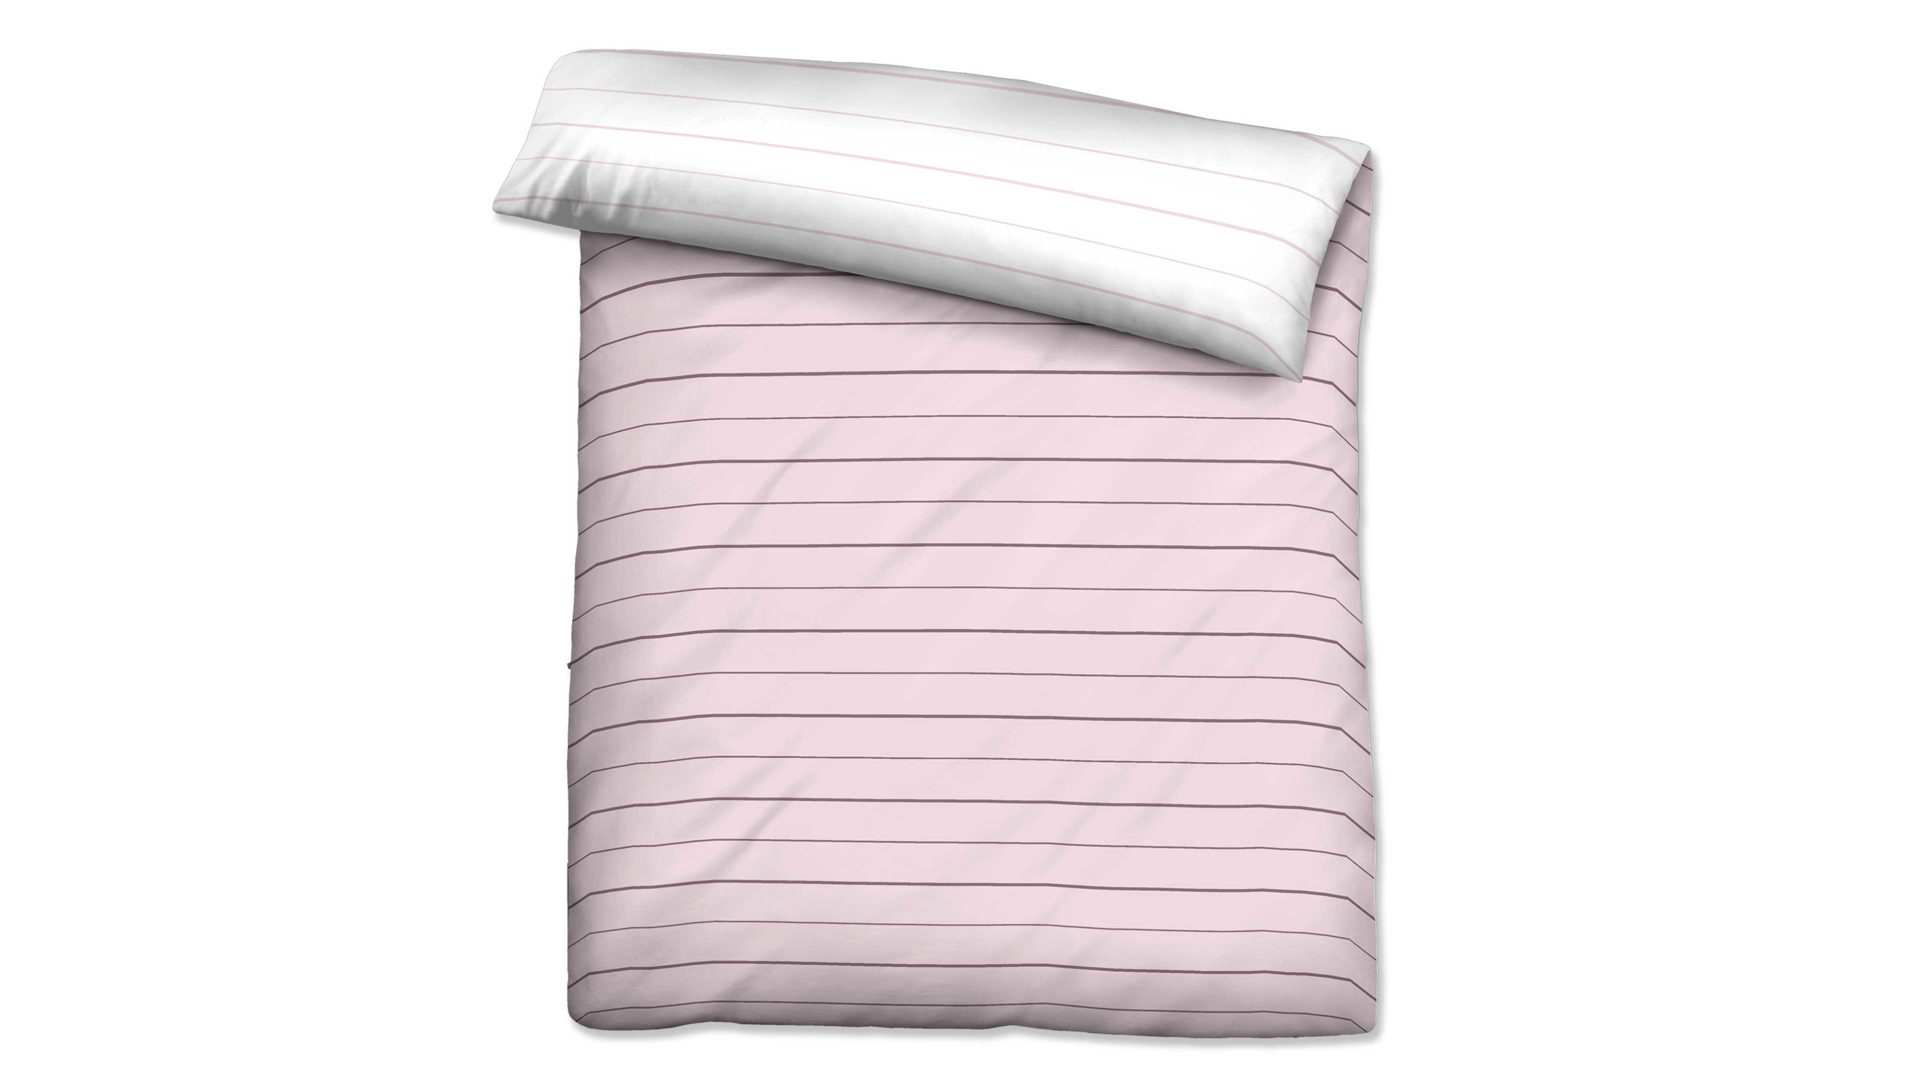 Bettbezug Biberna aus Stoff in Pastell biberna Mako-Satin Bettdeckenbezug Streifen Mix & Match rosefarbene & sturmgraue Streifen – ca. 200 x 200 cm